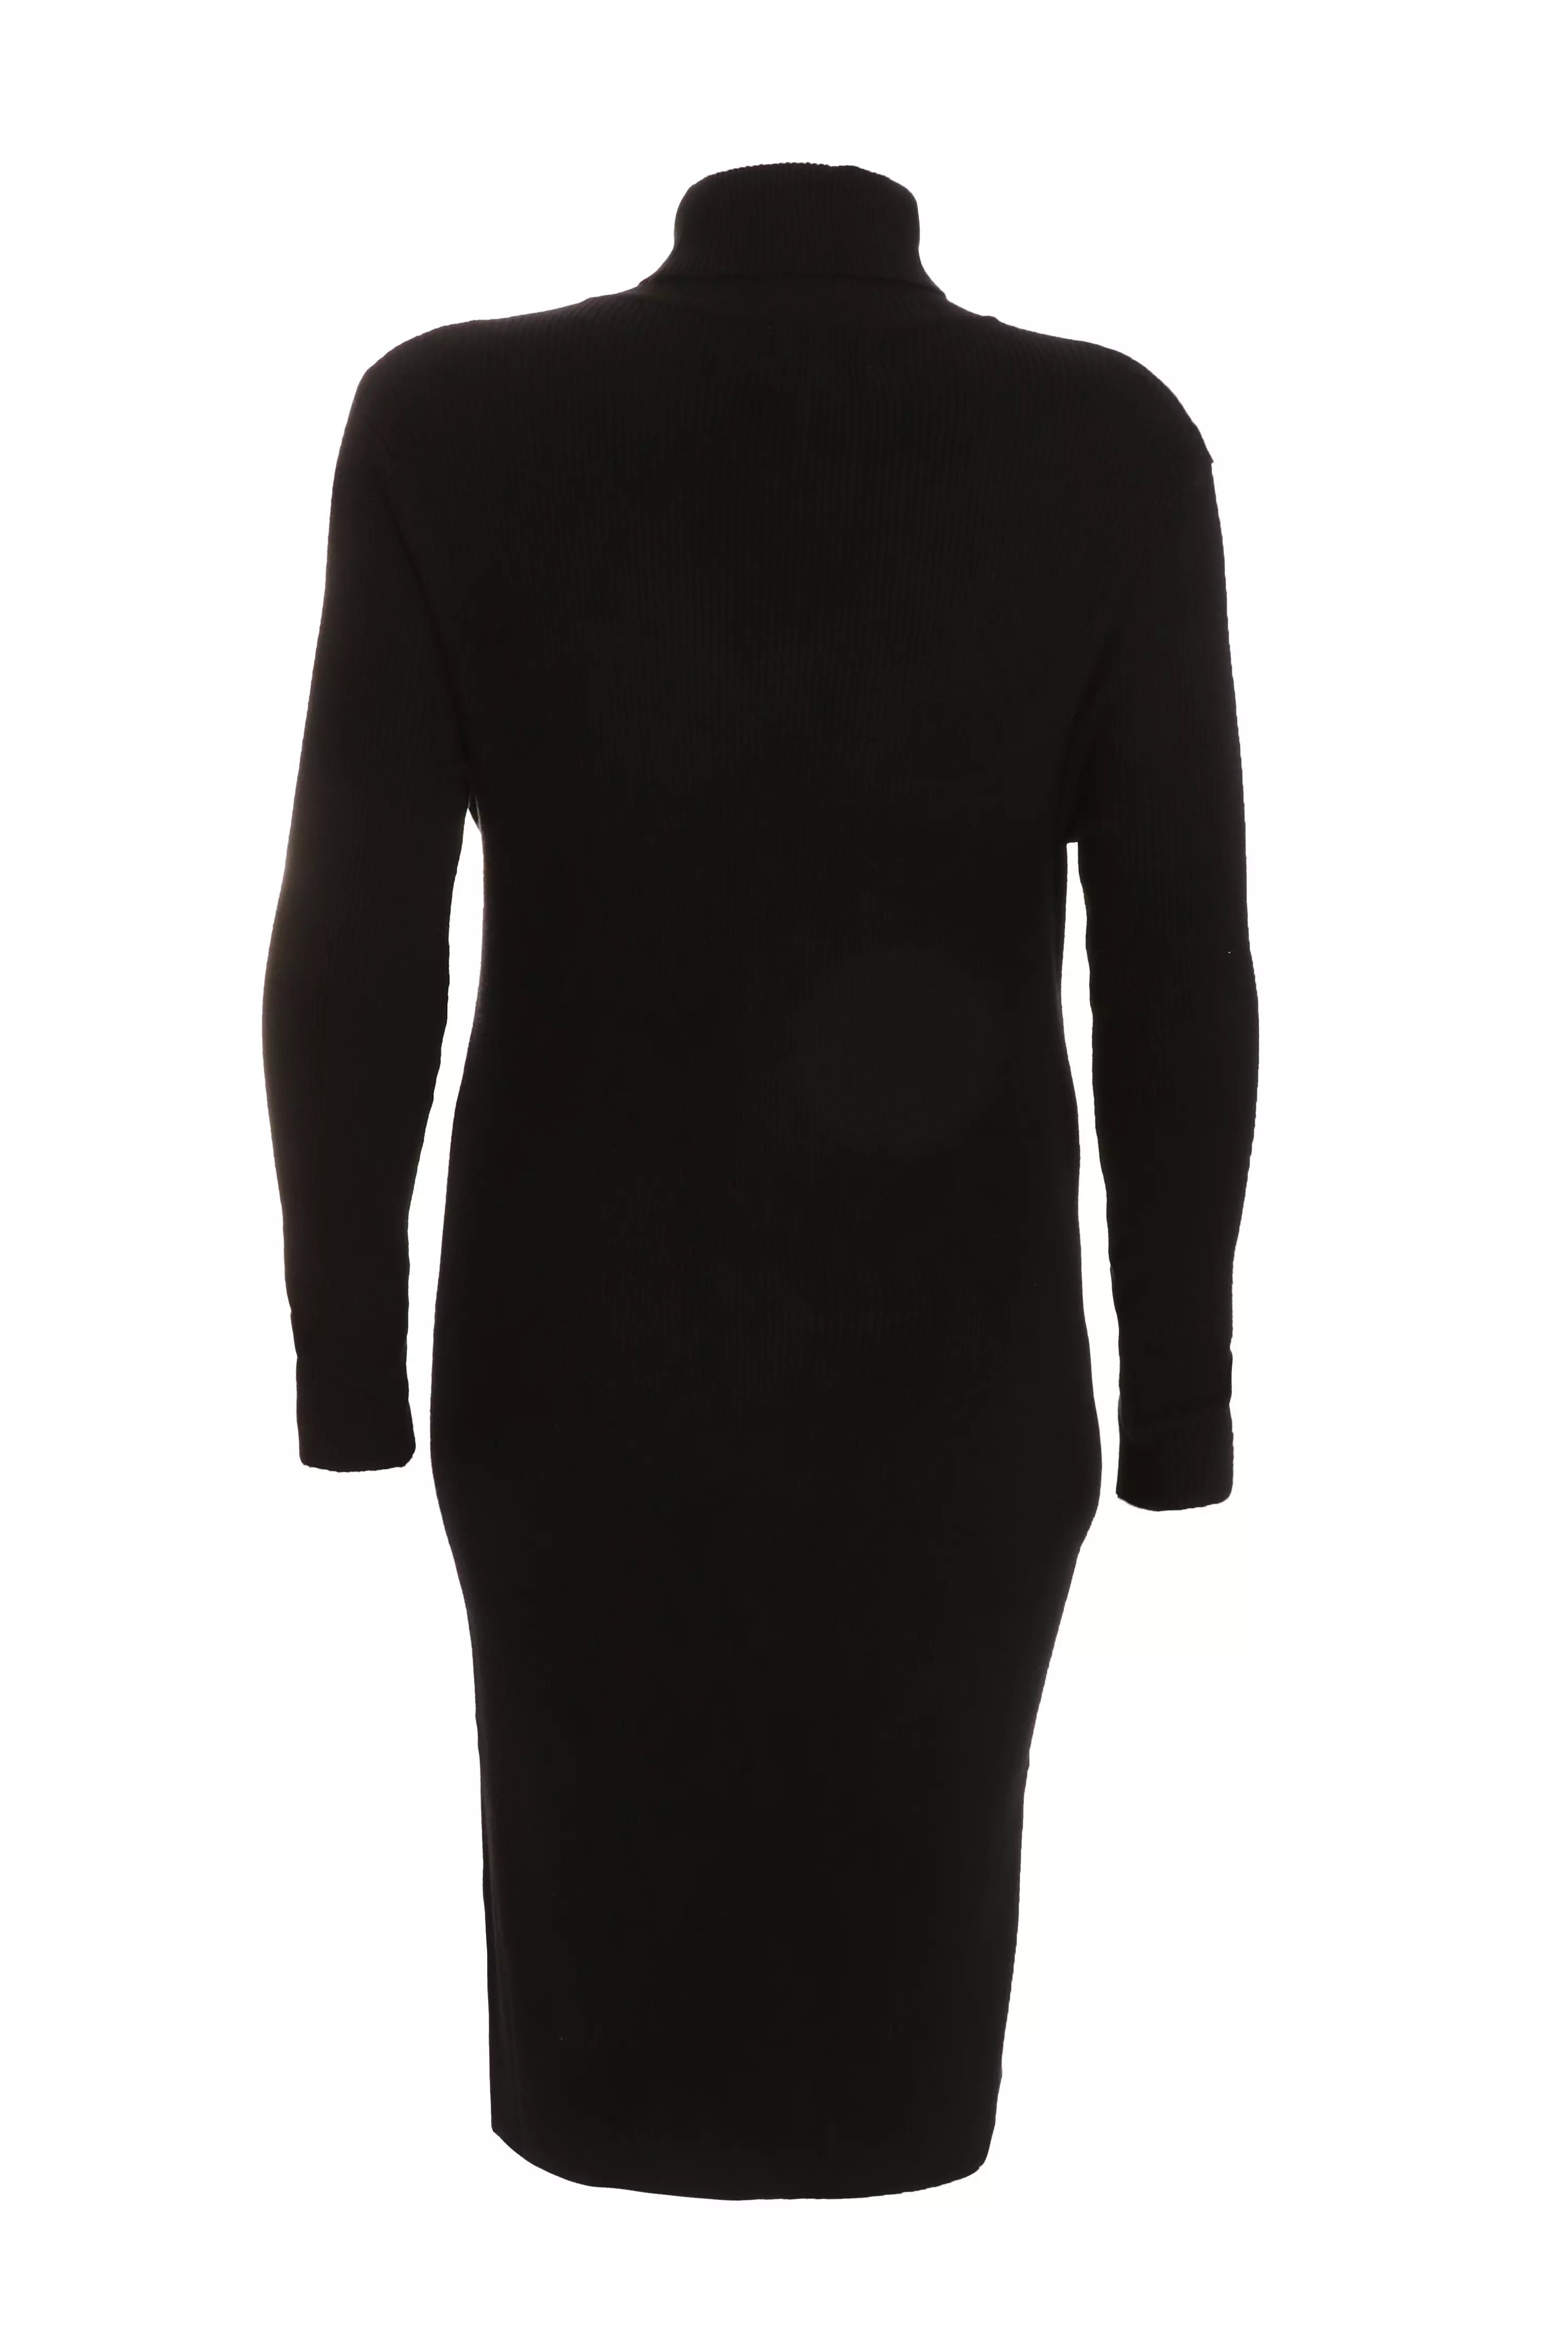 Curve Black Knit Long Sleeve Jumper Dress